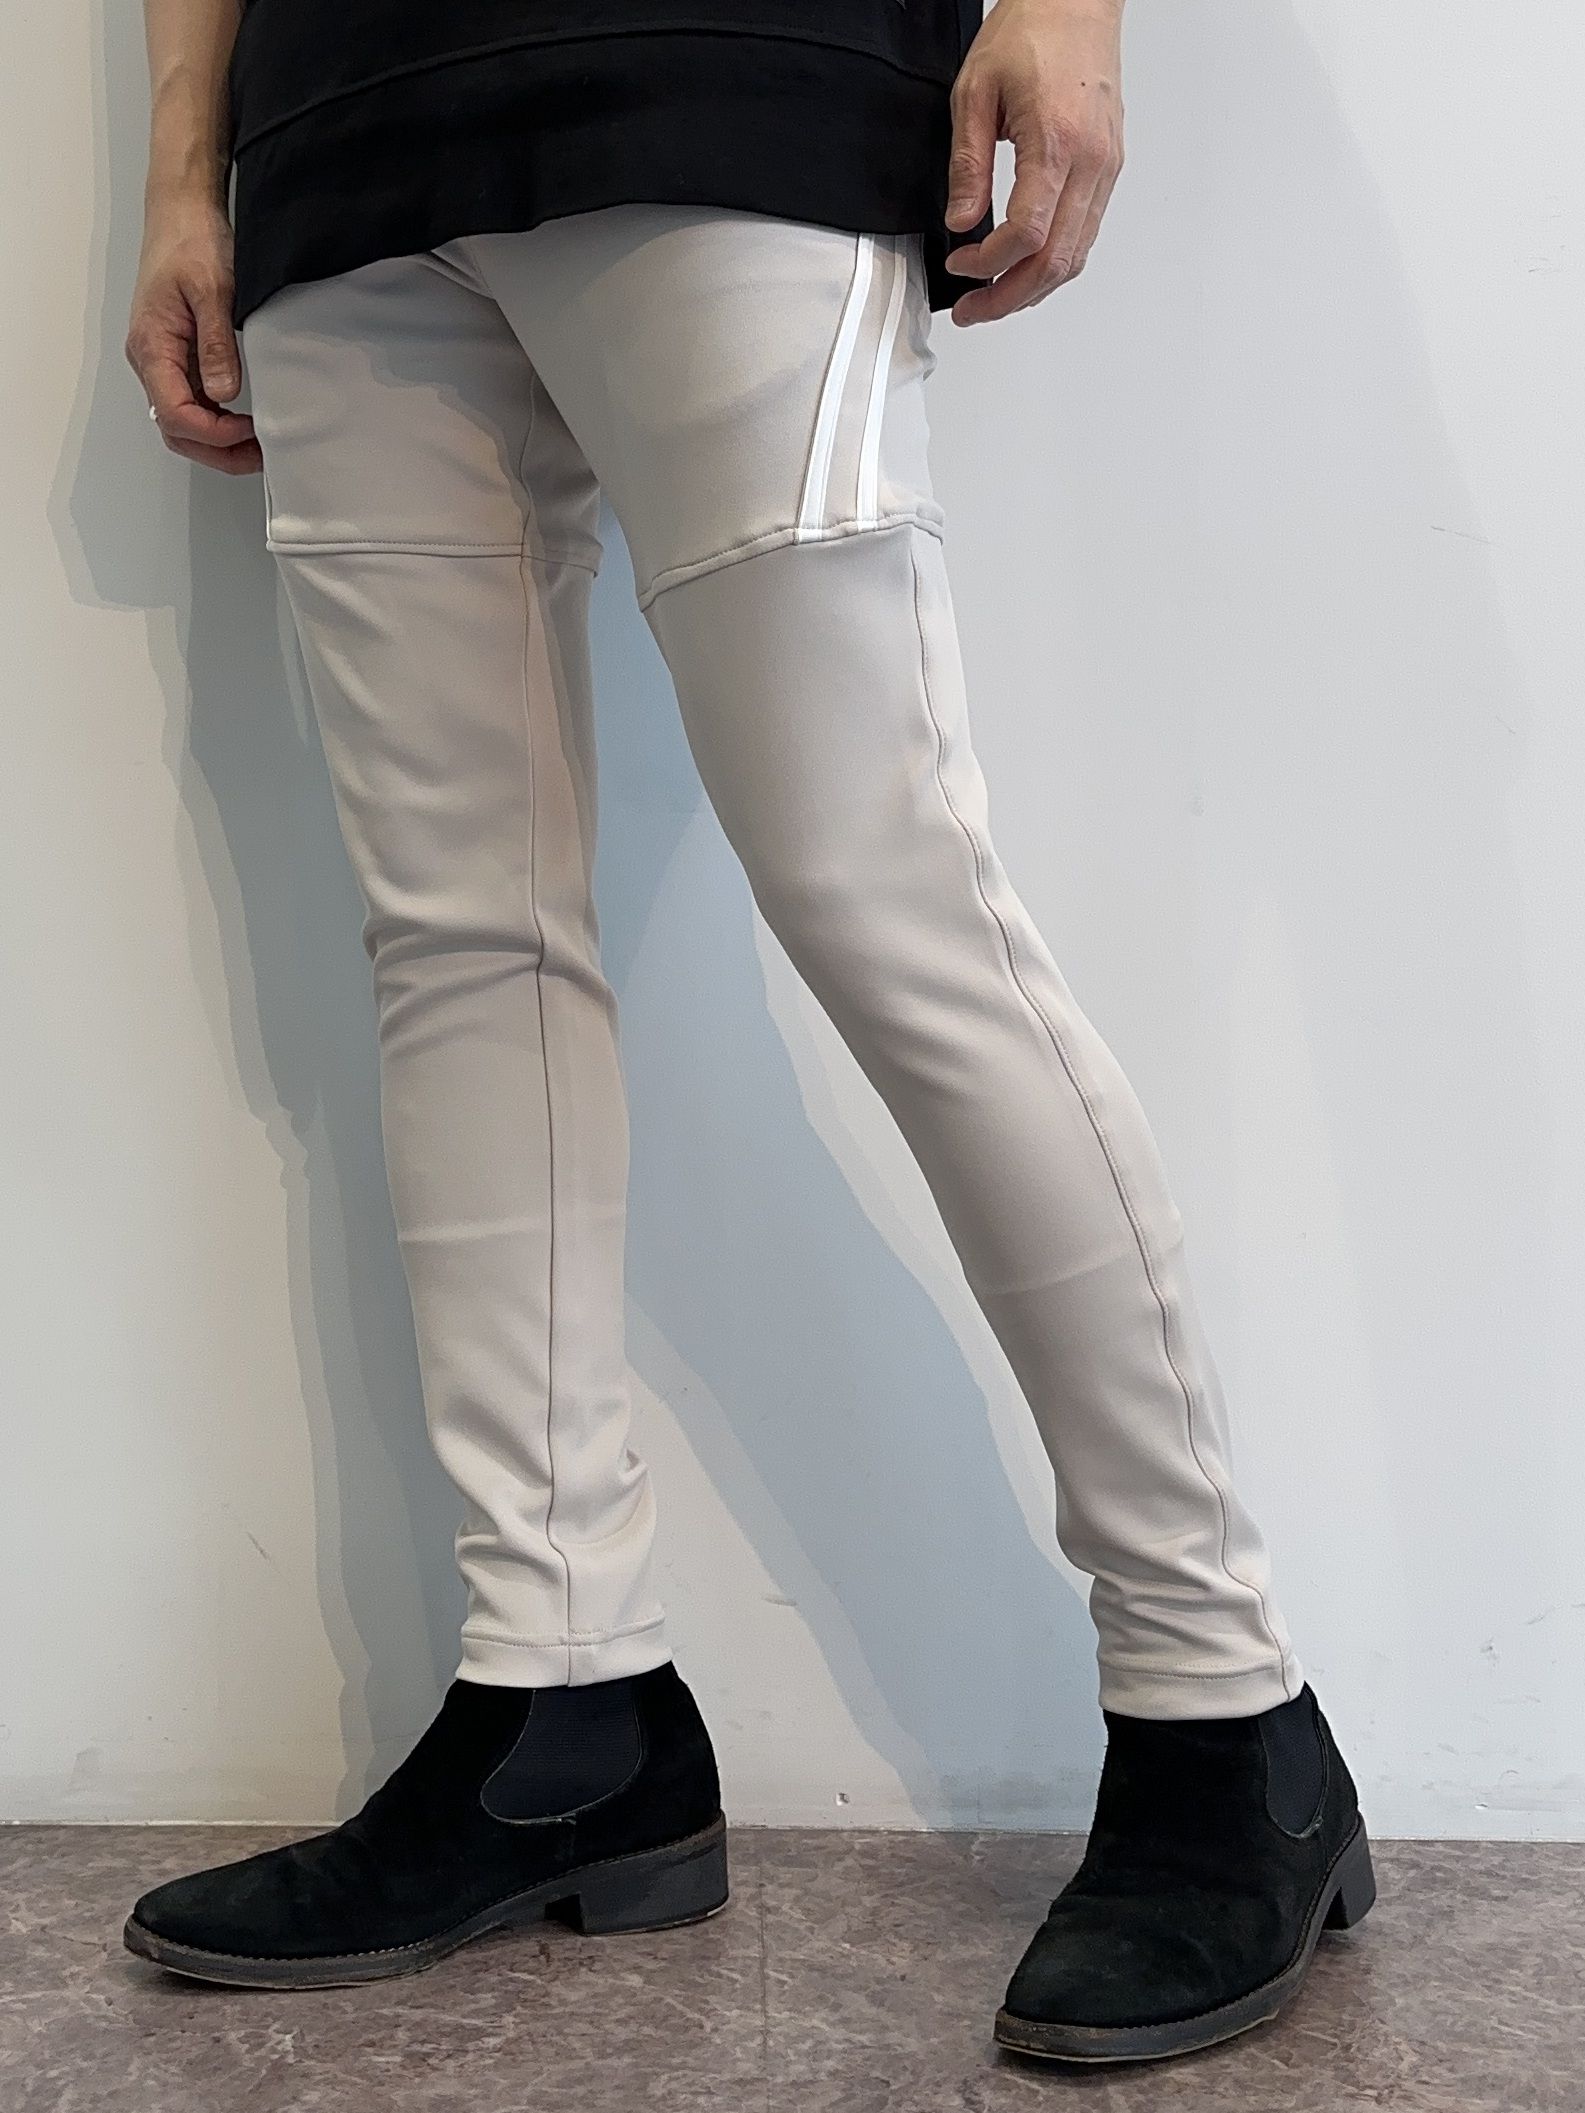 RESOUND CLOTHING - TYLER LINE PANTS / RC28-ST-026 / イージーライン